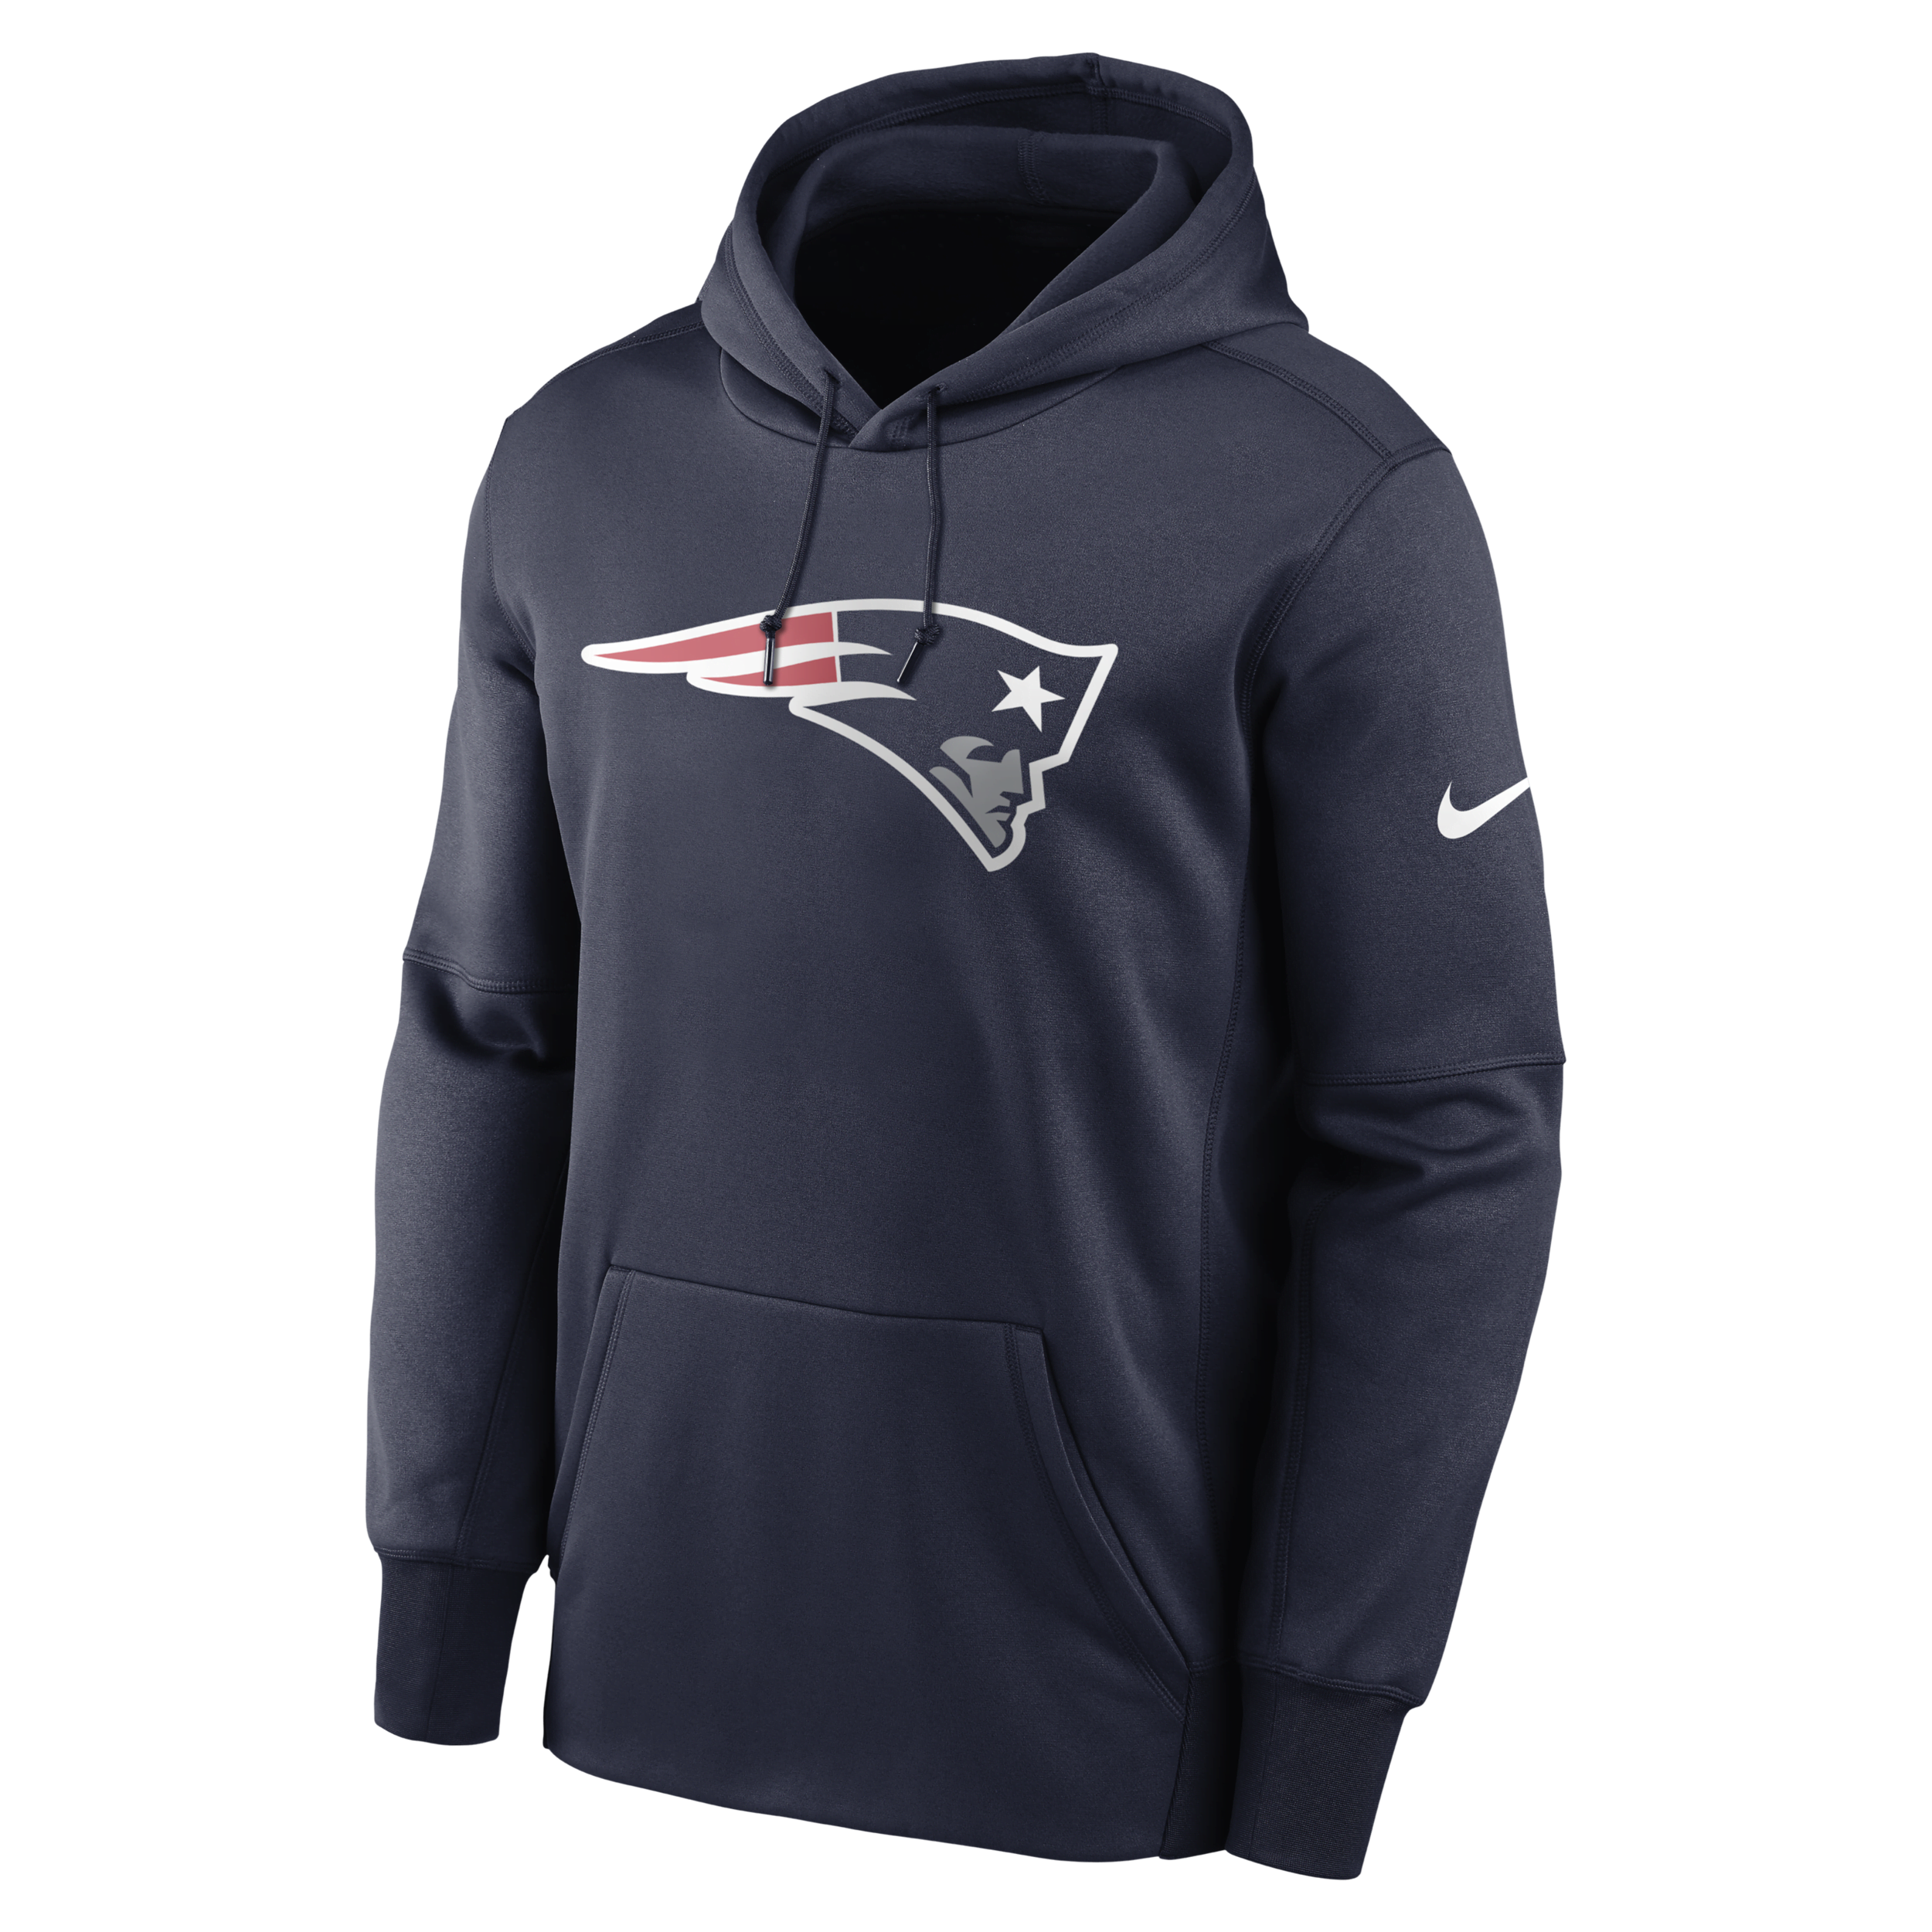 Felpa pullover con cappuccio Nike Therma Prime Logo (NFL New England Patriots) - Uomo - Blu